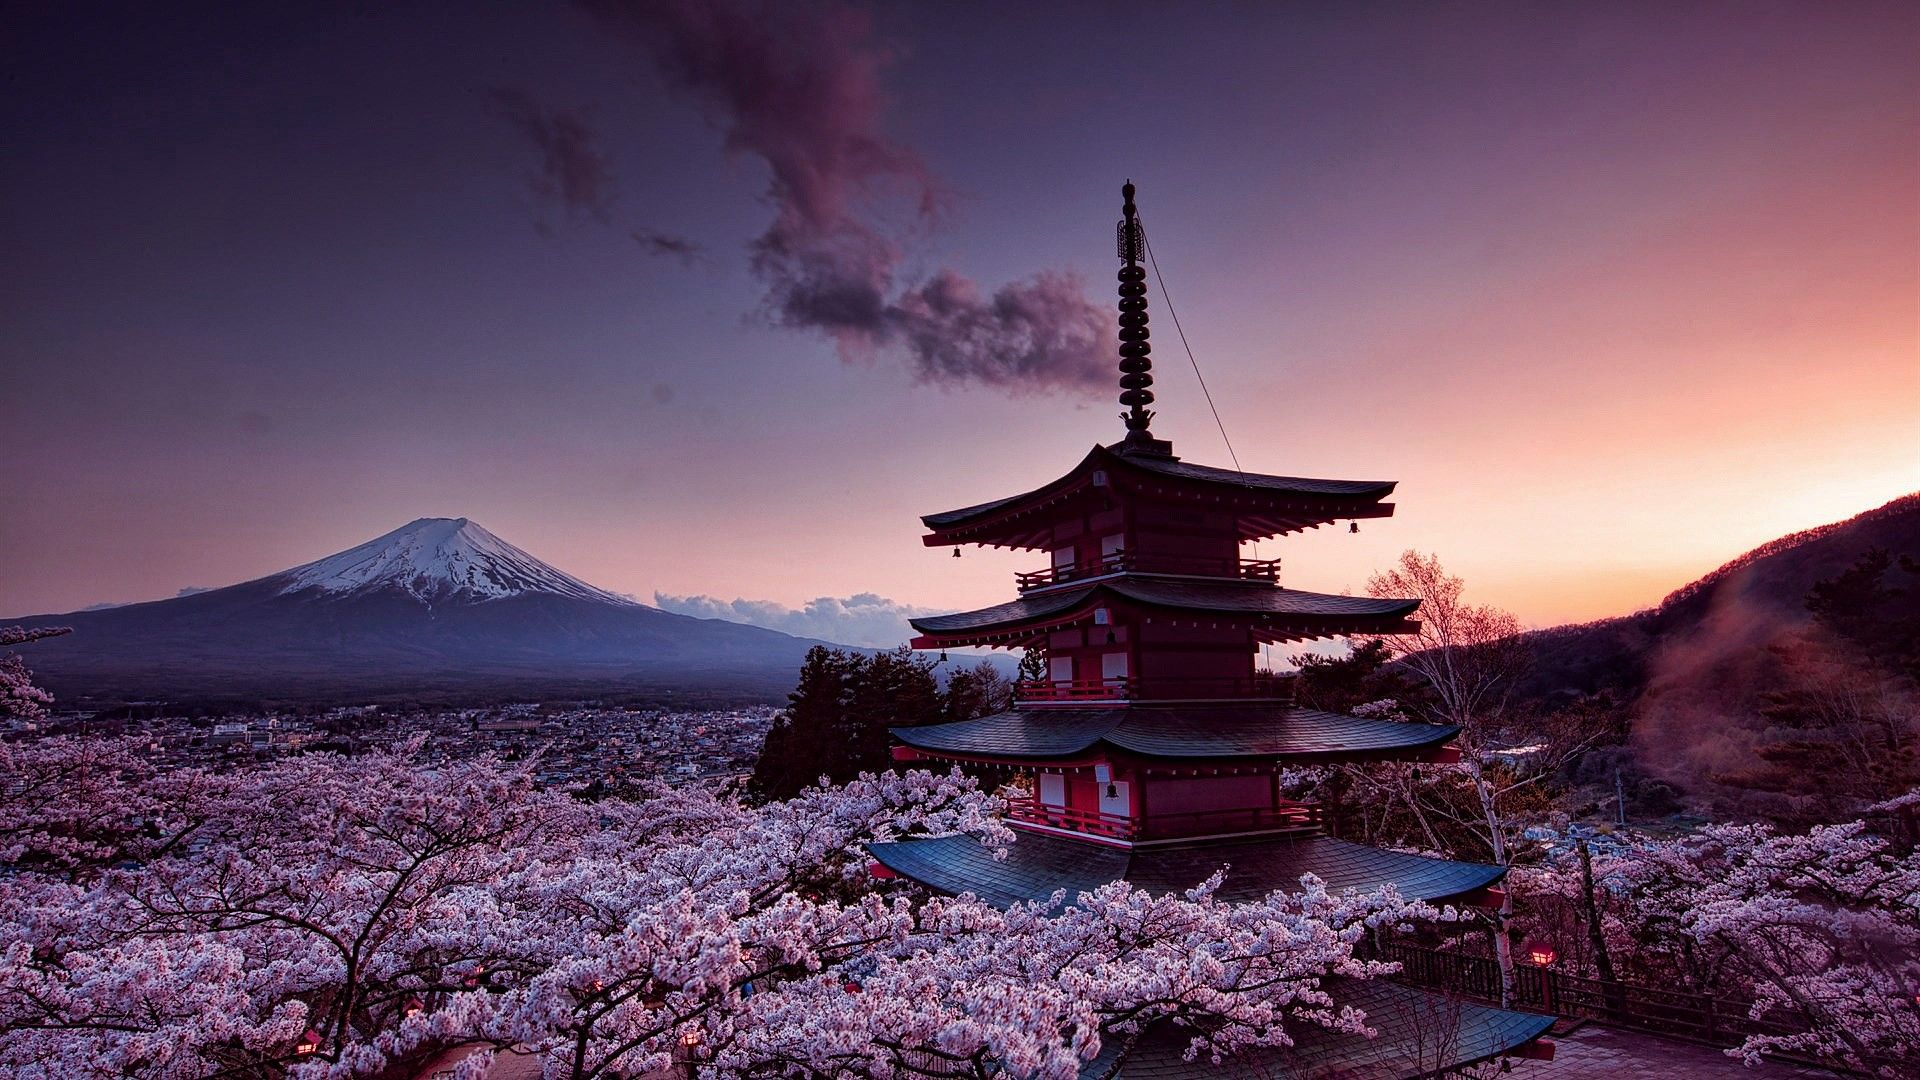 Asia Hurei Tower Sunset. Mount Fuji, World Wallpaper, Nature Wallpaper